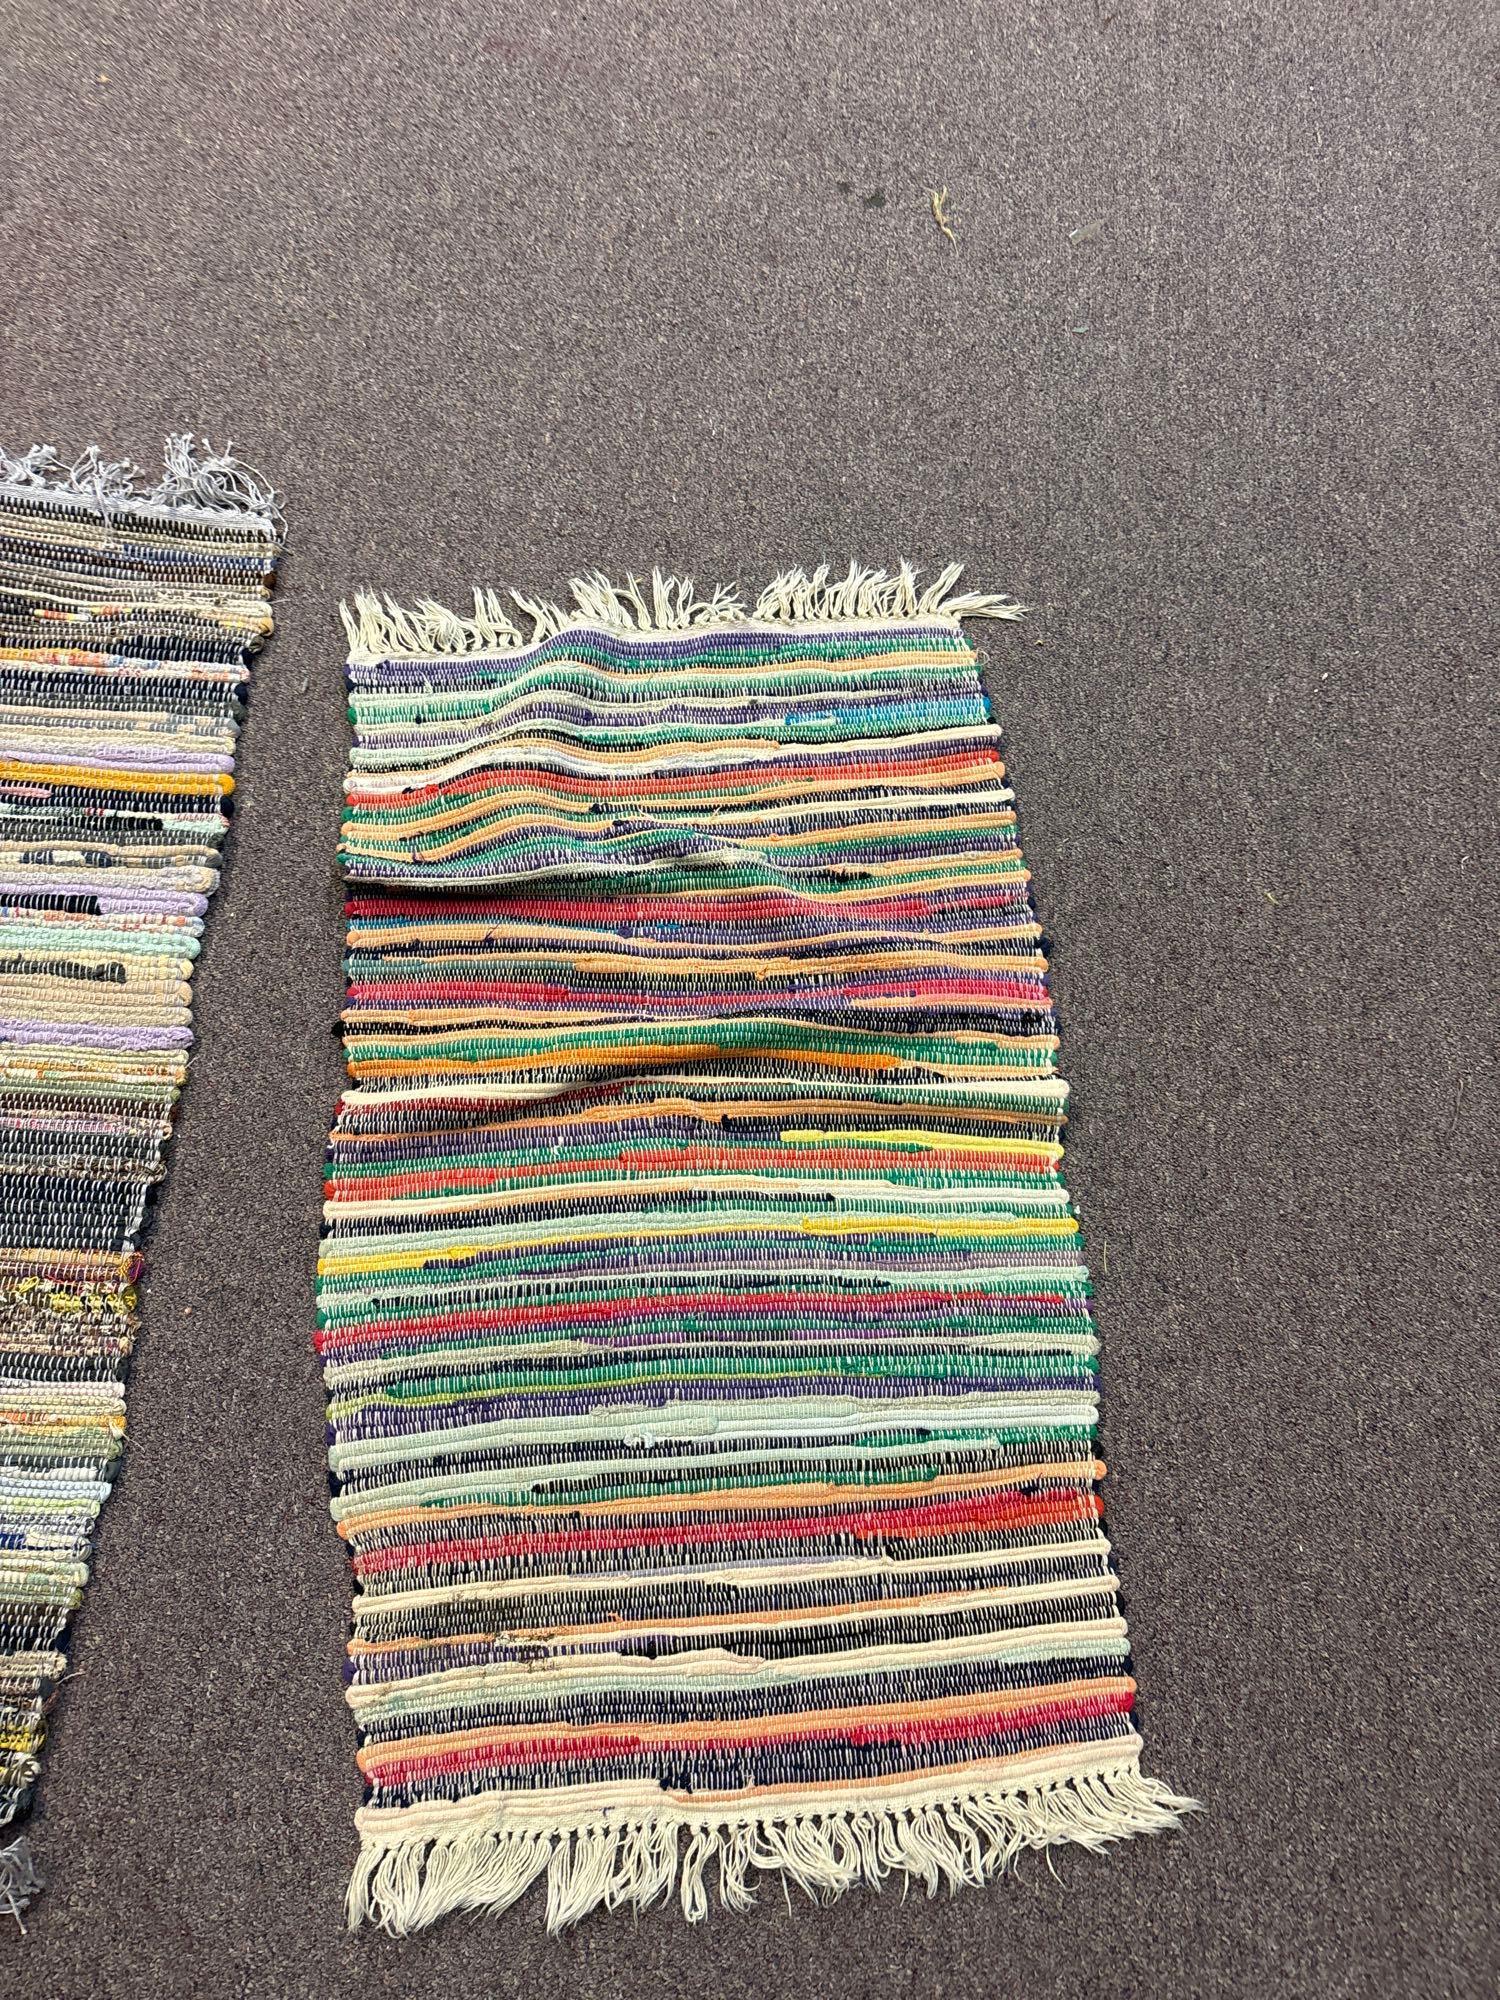 six vintage rag rugs